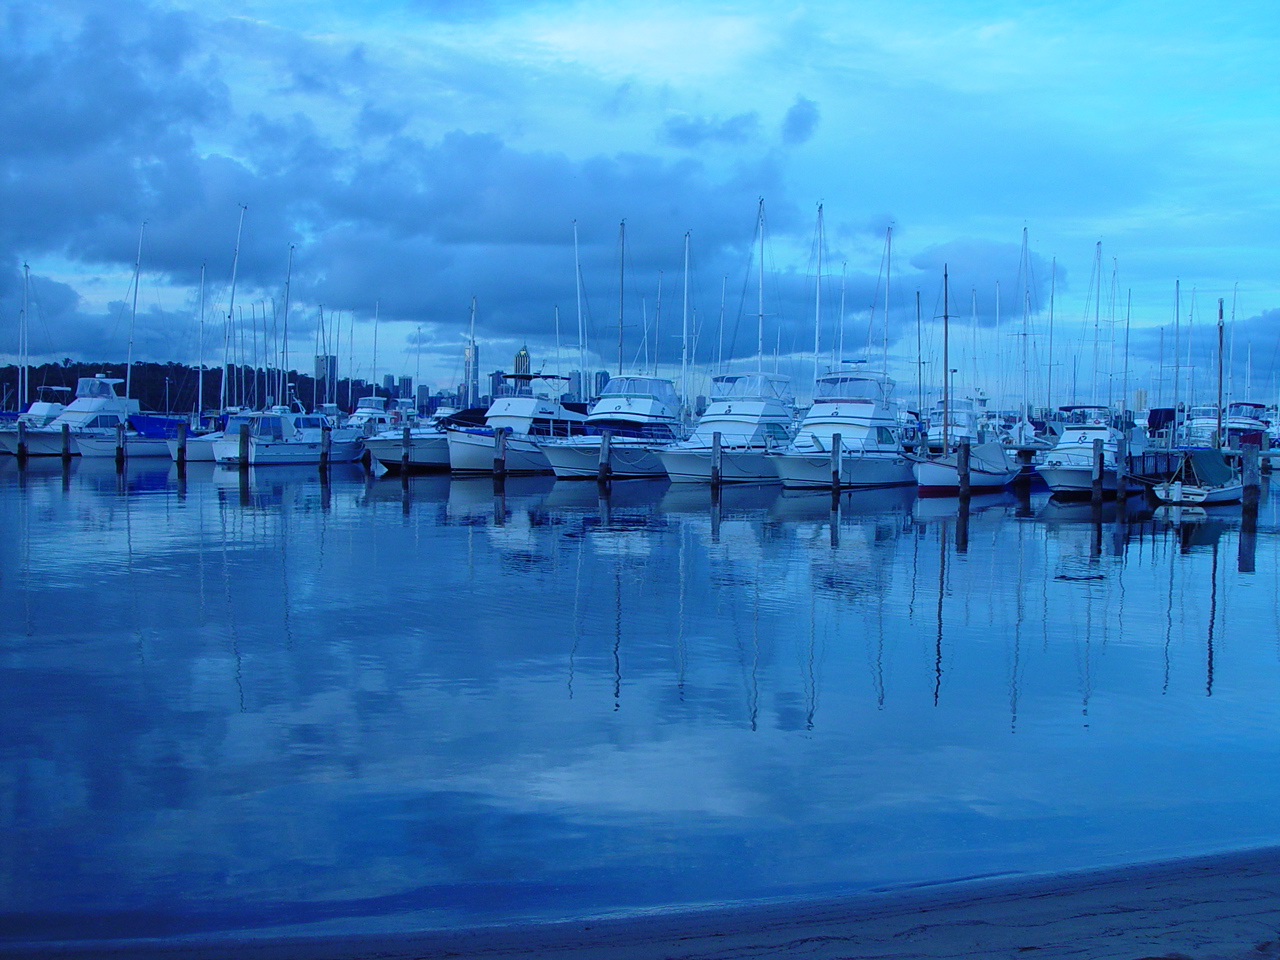 Boats and reflections, Royal Perth Yacht Club